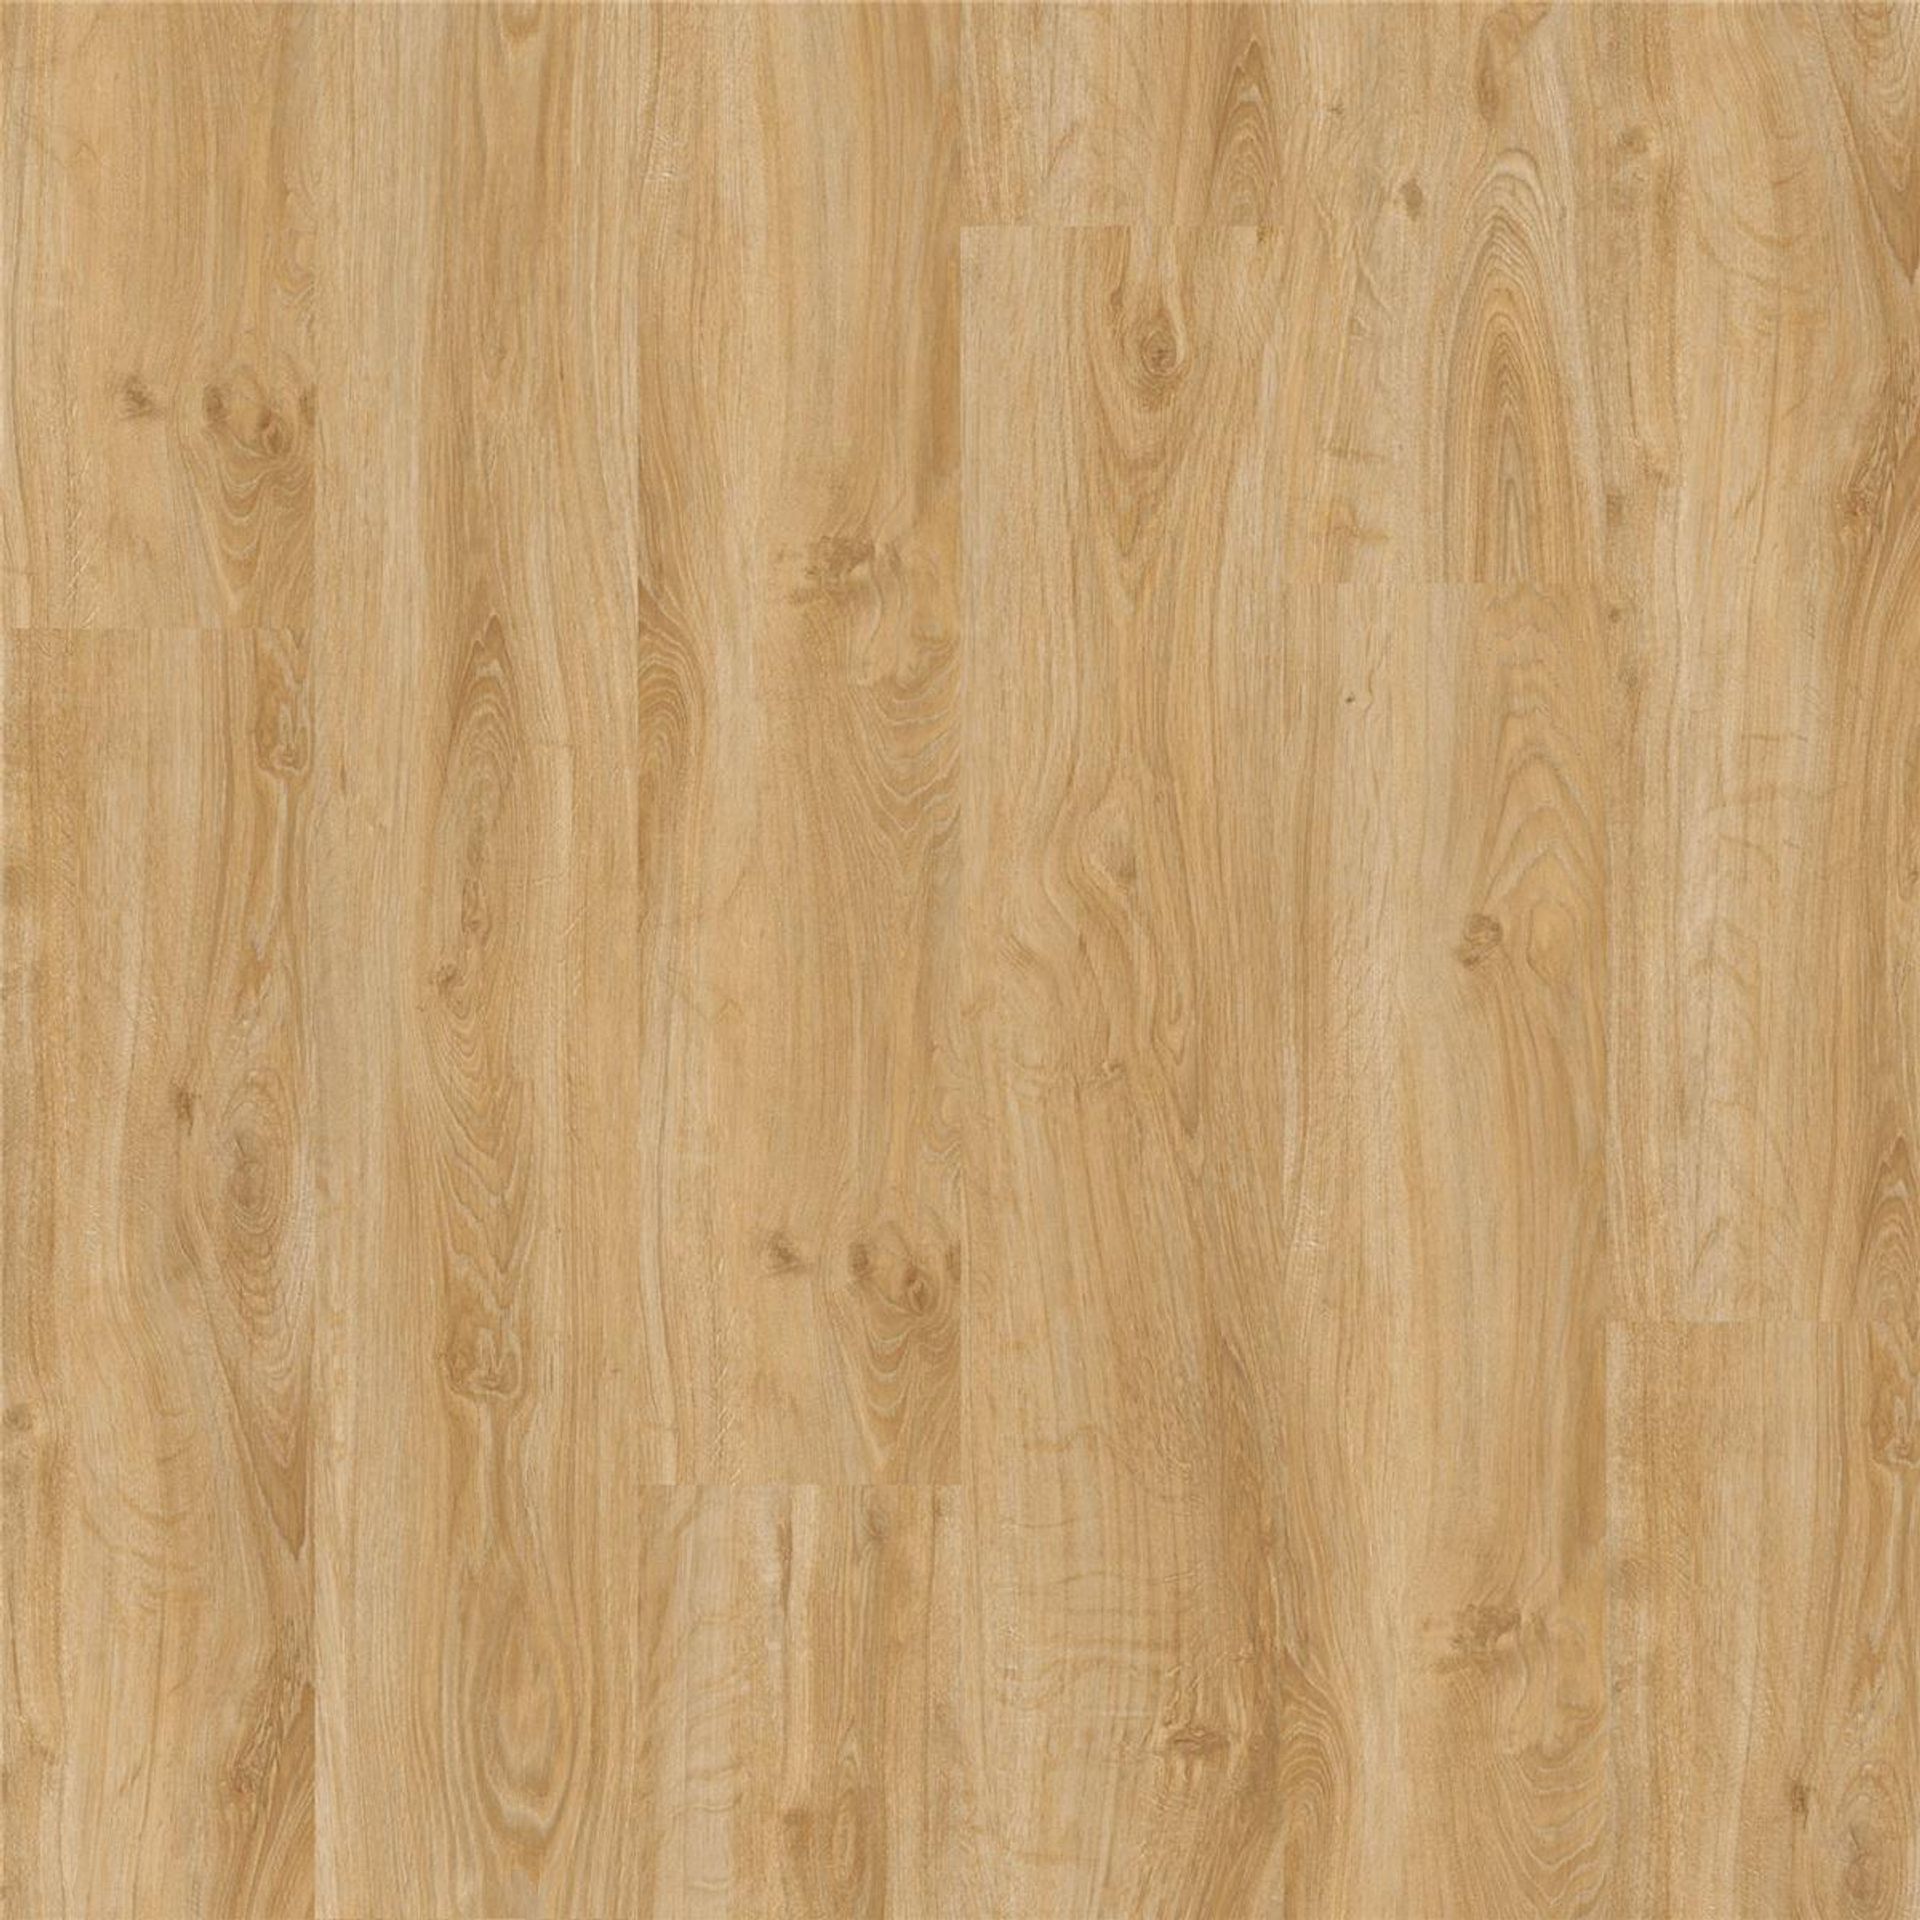 Designboden CLASSICS-English Oak-Classical Planke 121,1 cm x 19,05 cm - Nutzschichtdicke 0,30 mm